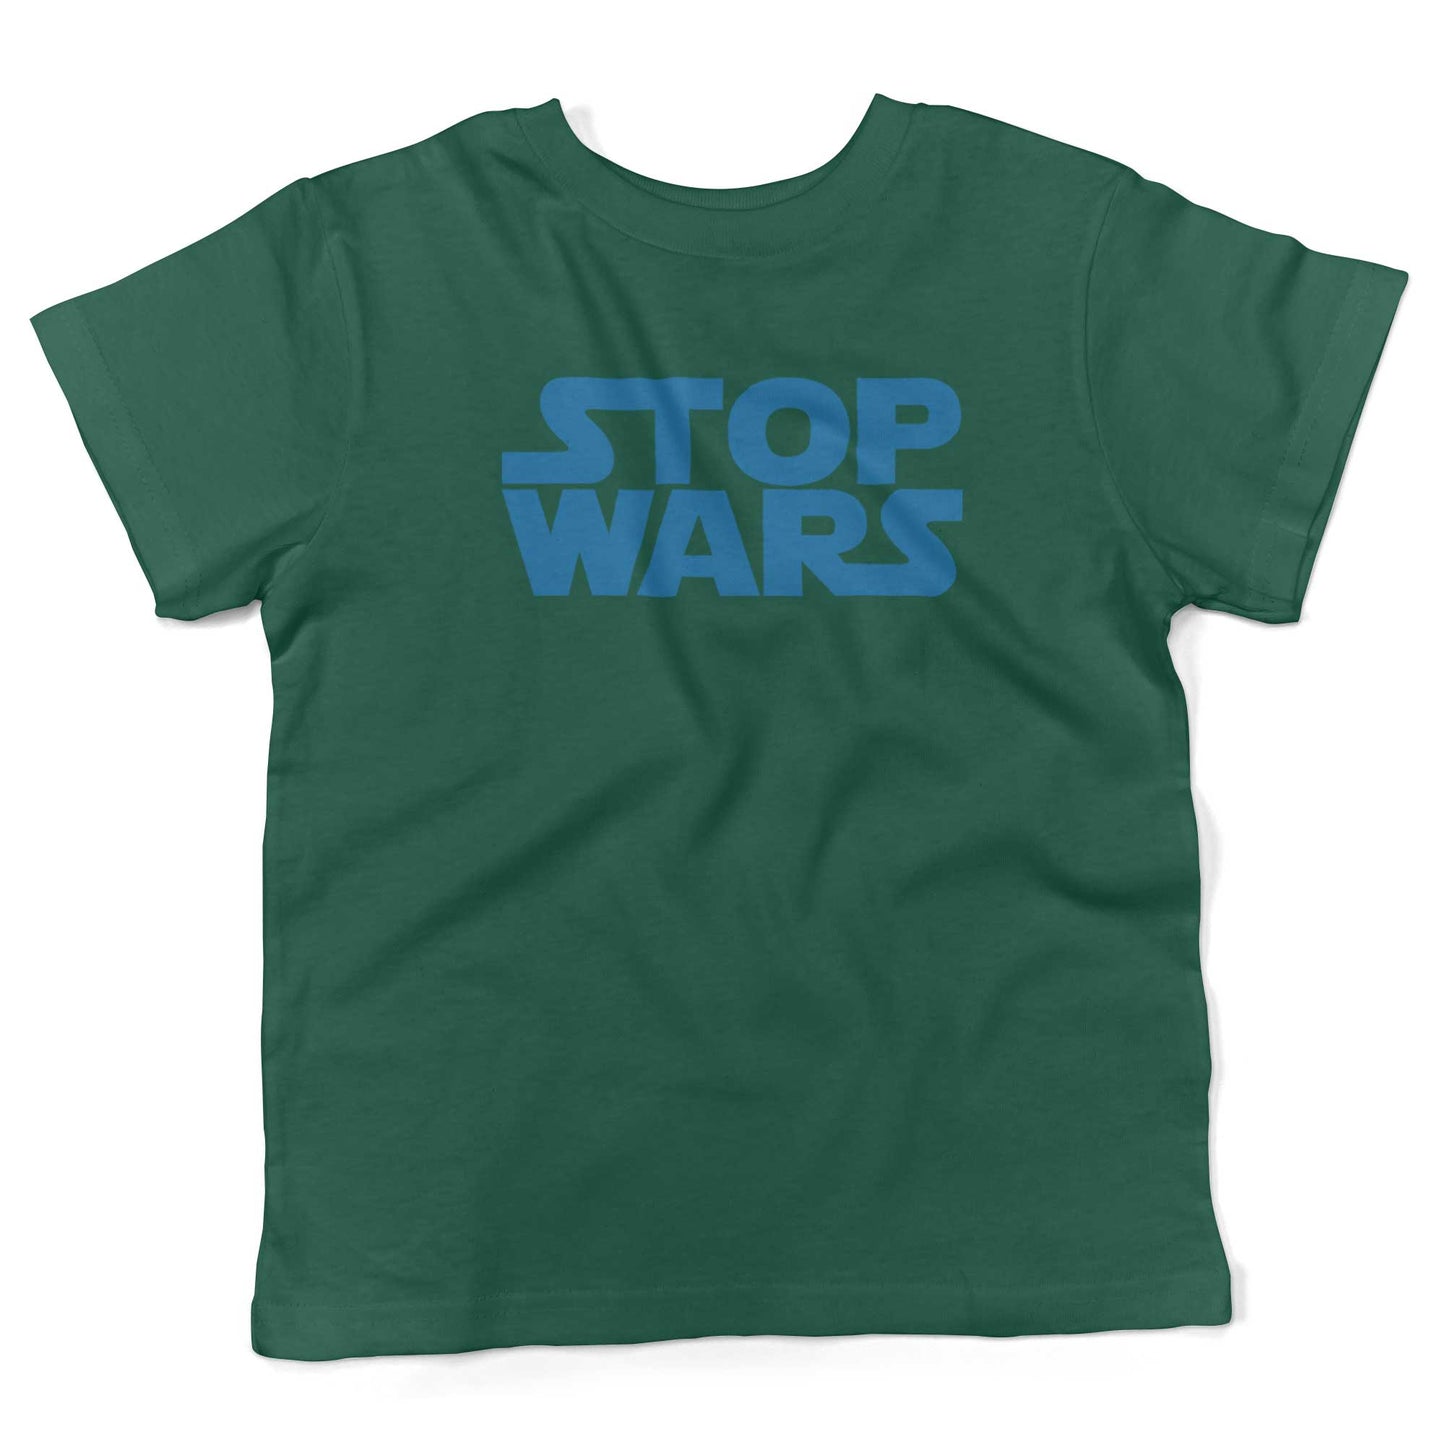 STOP WARS Toddler Shirt-Kelly Green-2T